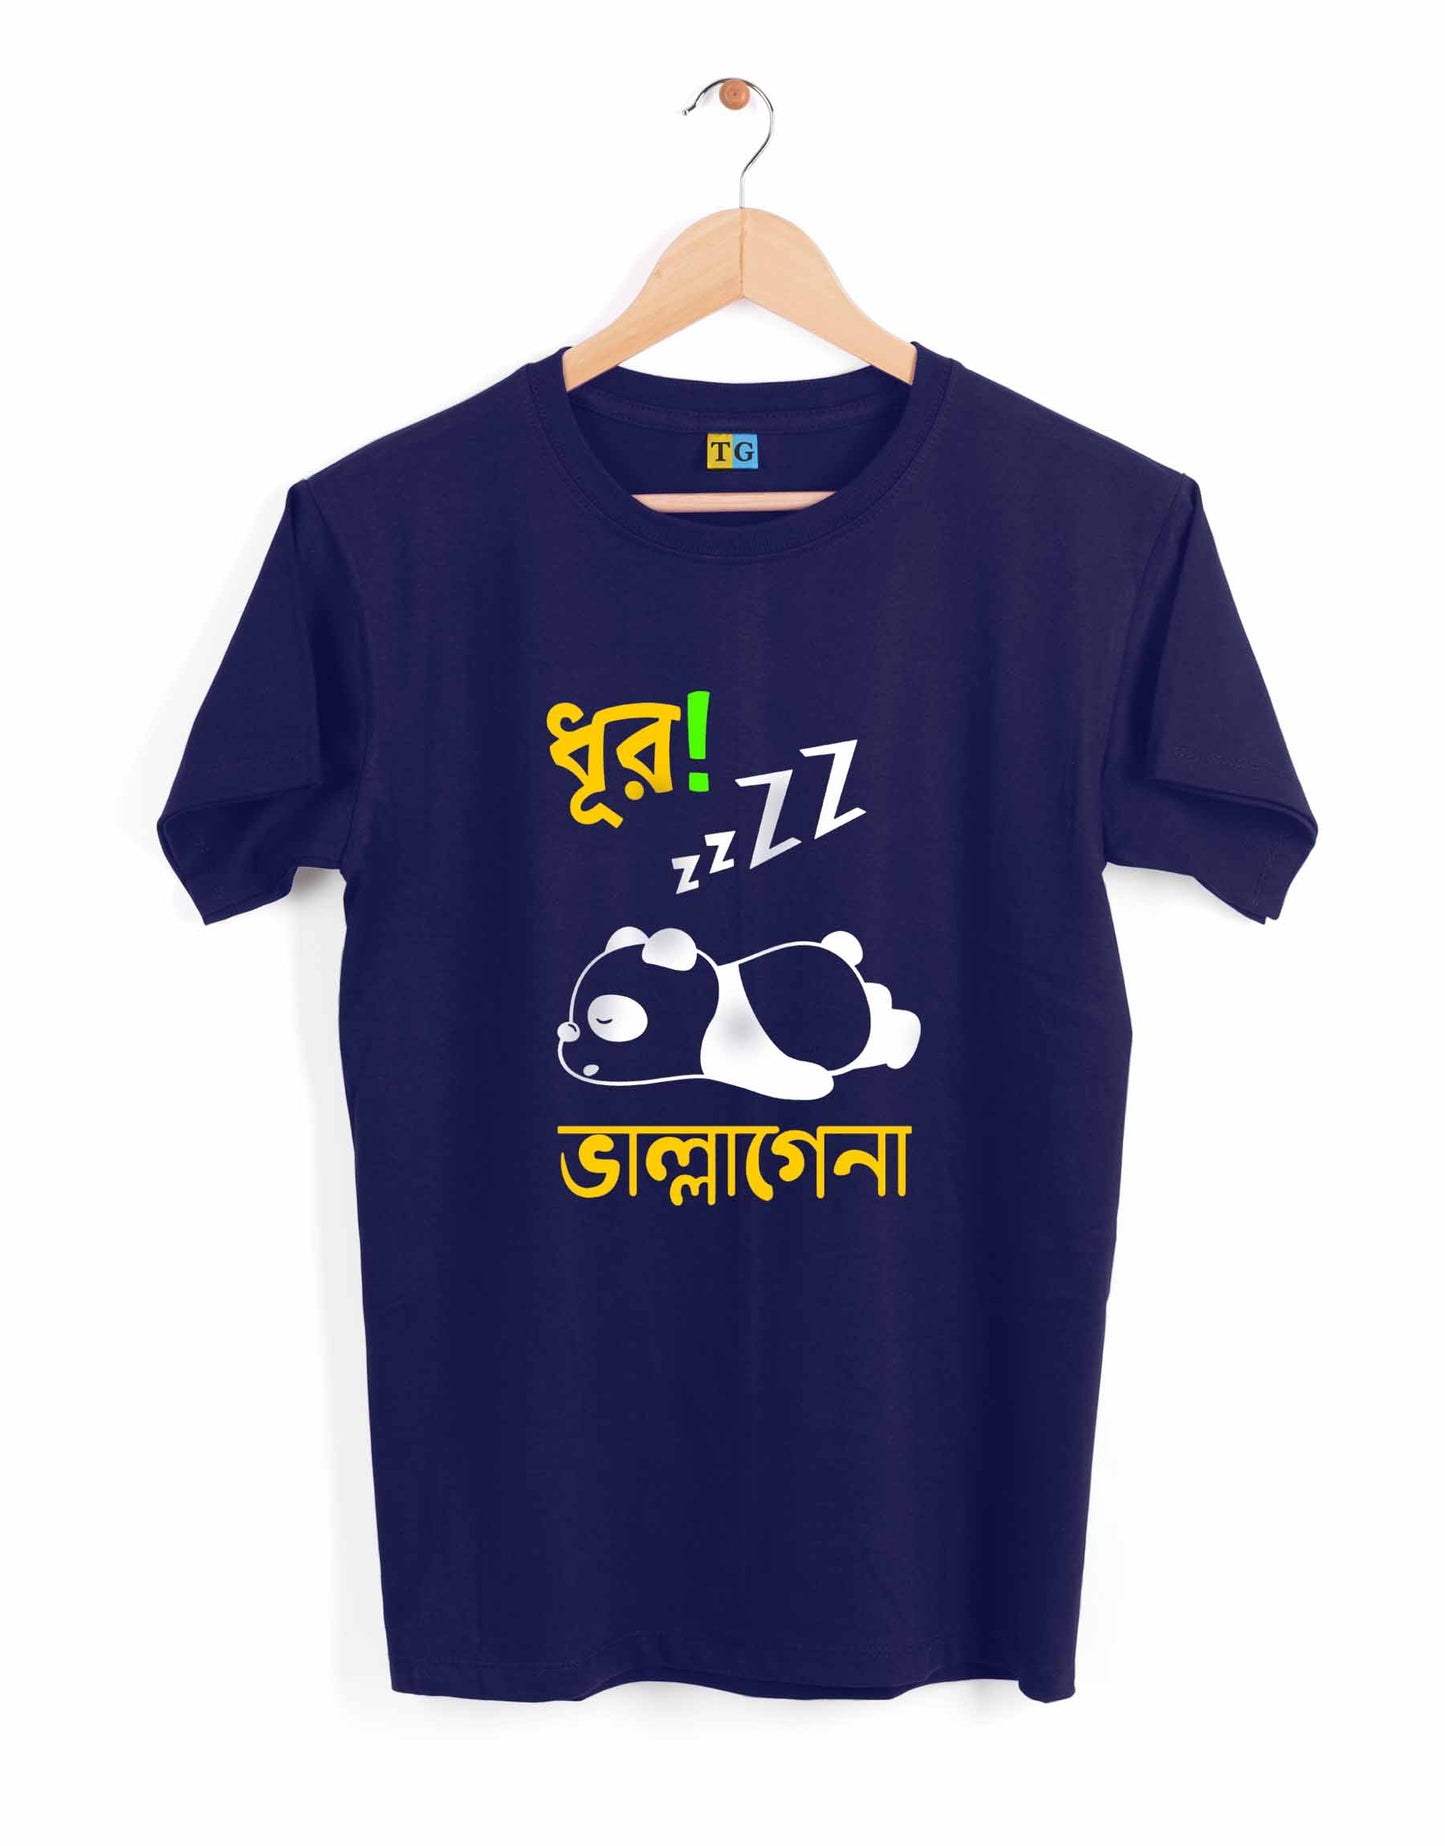 Dhur Vallagena Bengali T-Shirt | TEEGURUJI